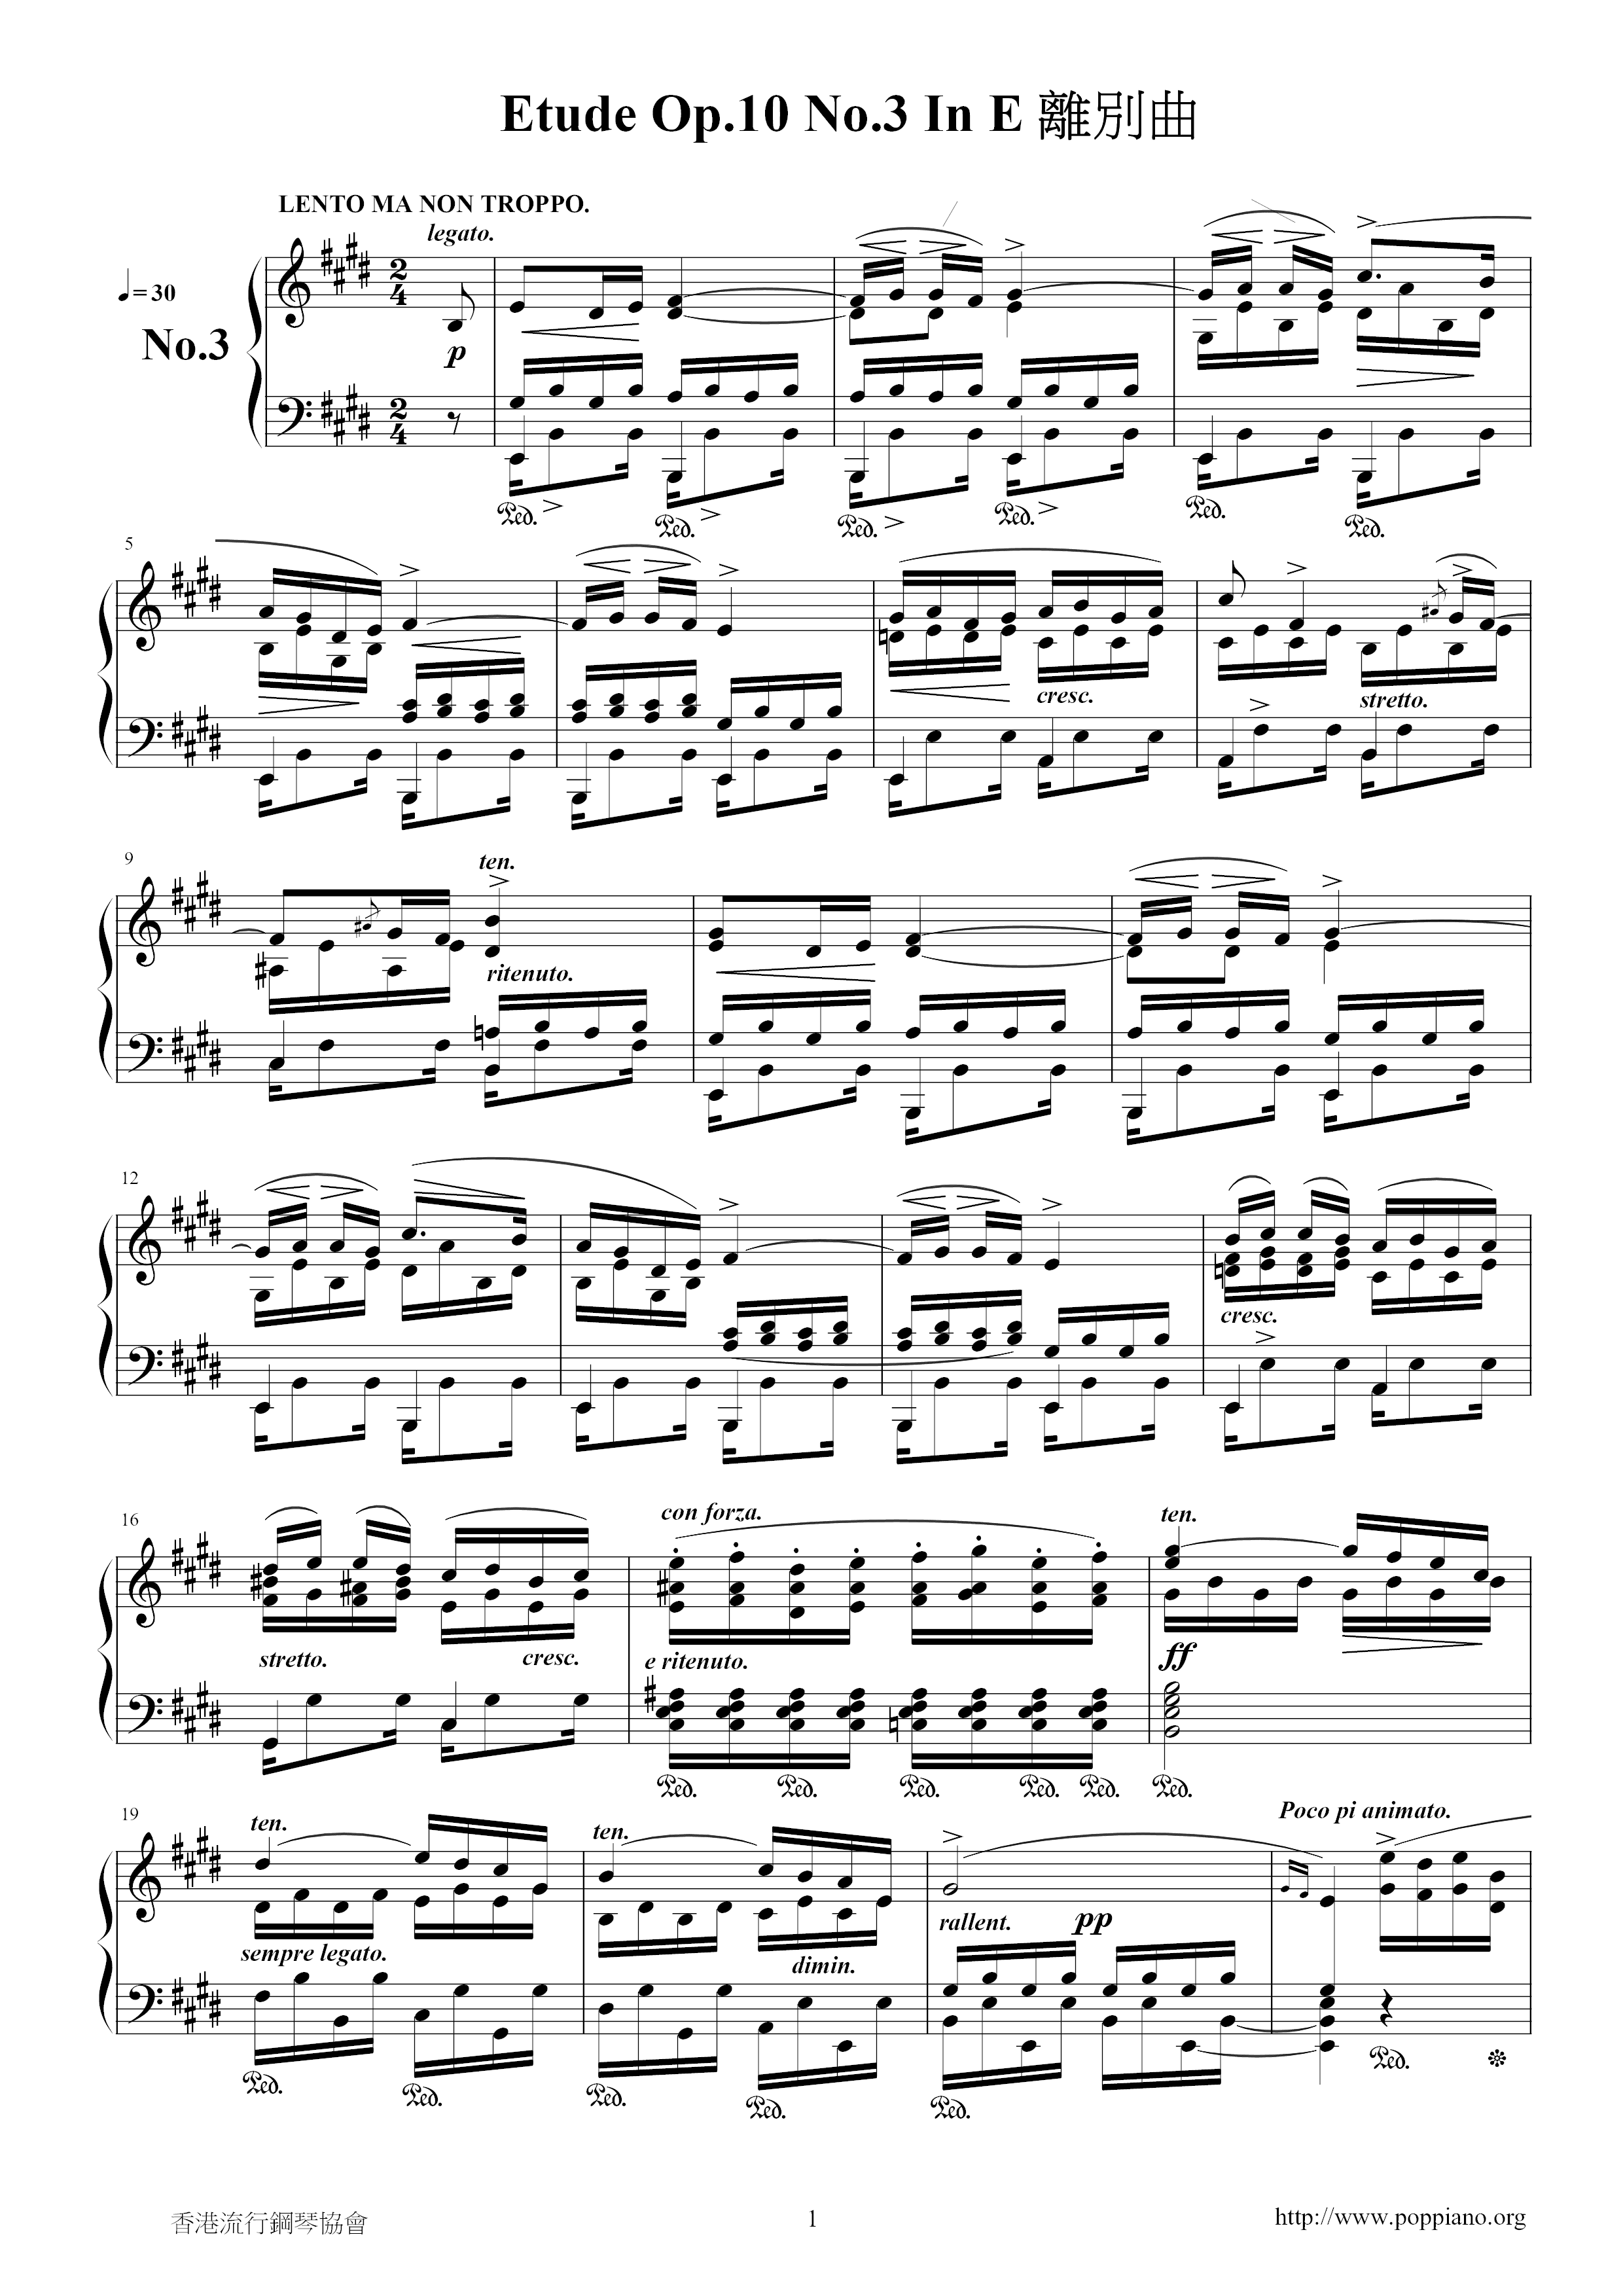 Op. 10, Etude No. 3 離別曲ピアノ譜